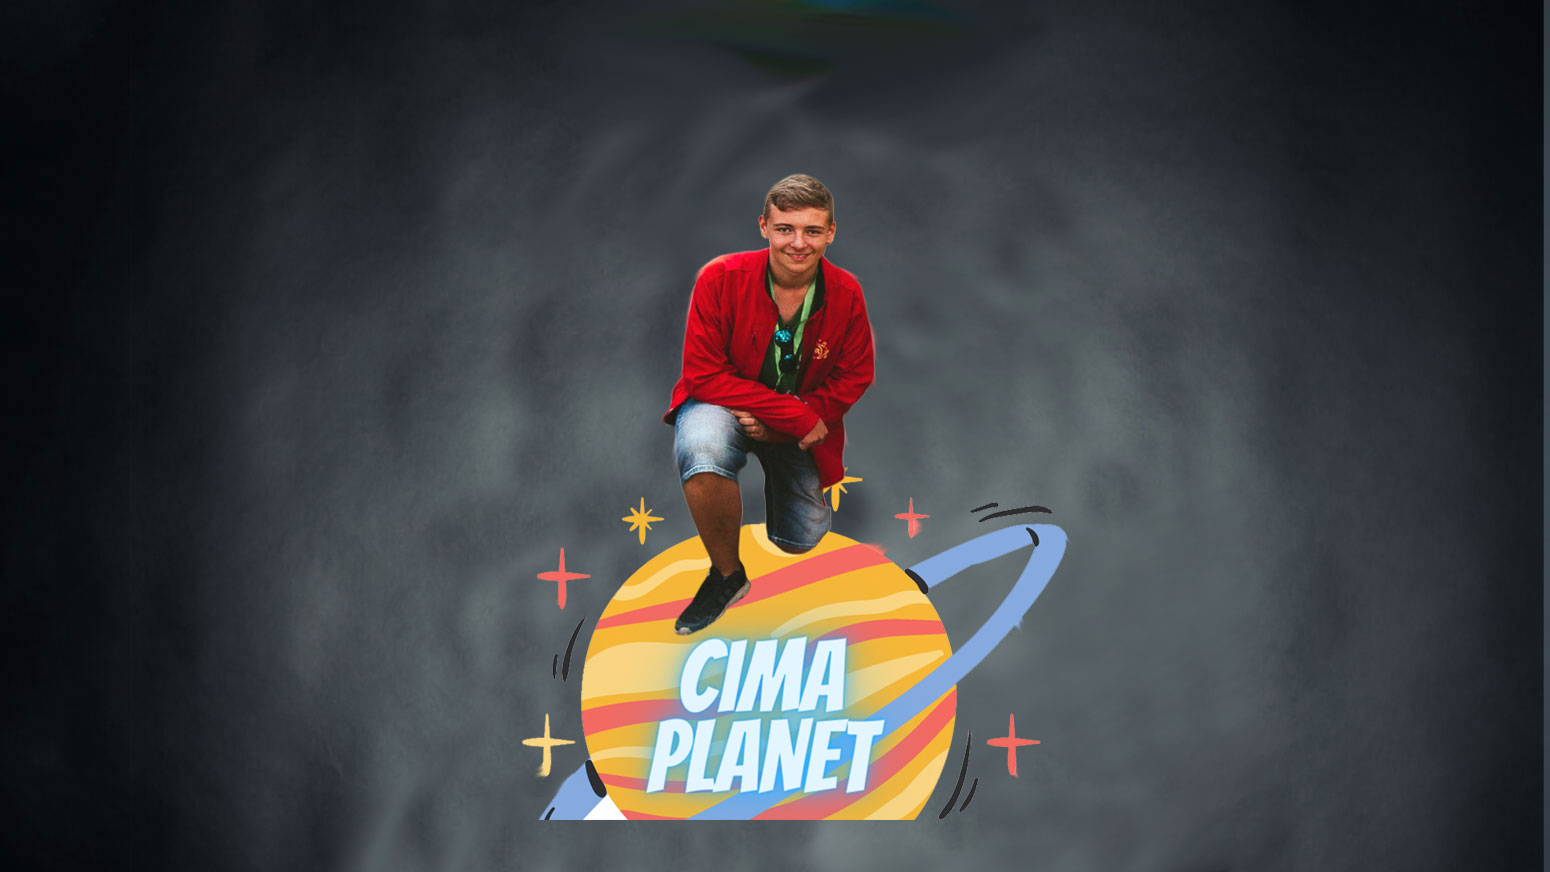 Cima Planet